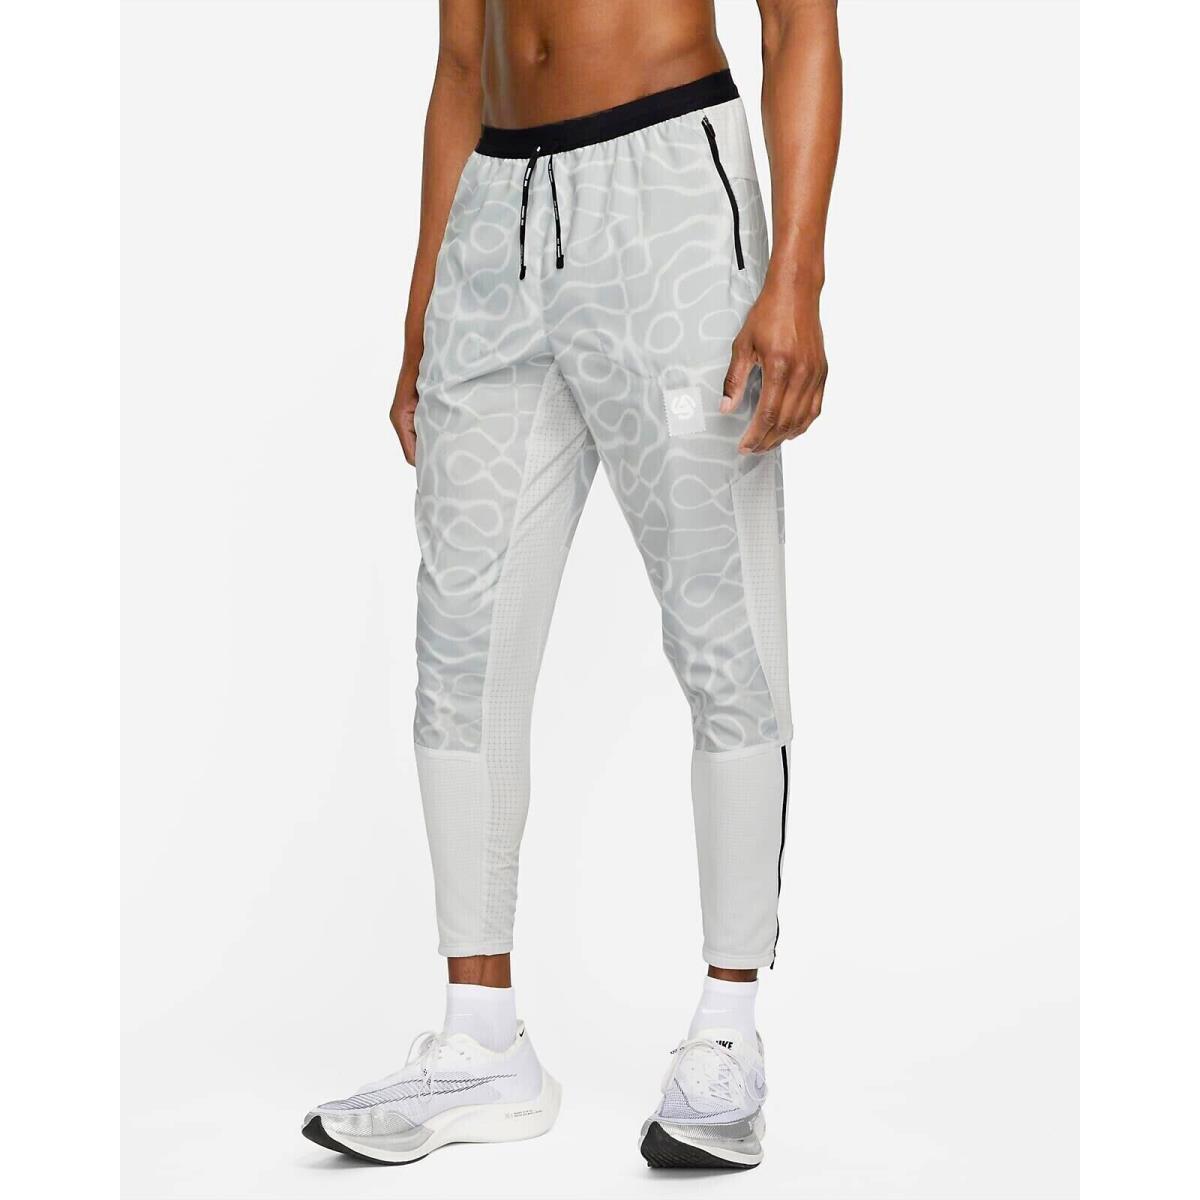 Nike Dri-fit Wild Run Phenom Elite Men`s Running Pants Woven Graphic Size M Gray